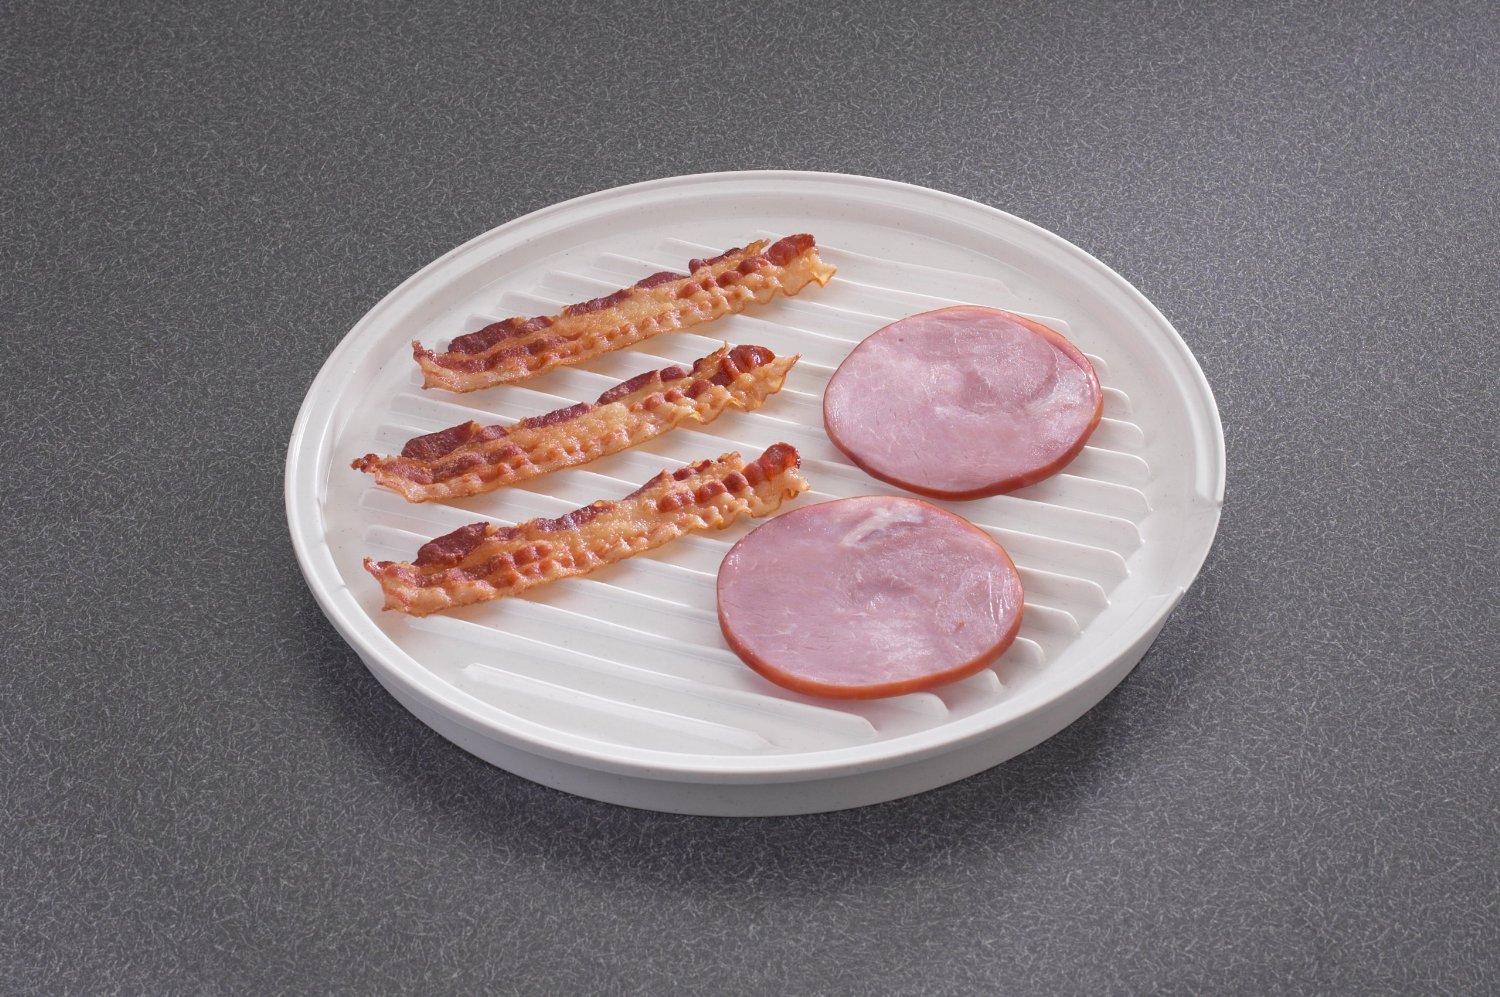 microwave bacon